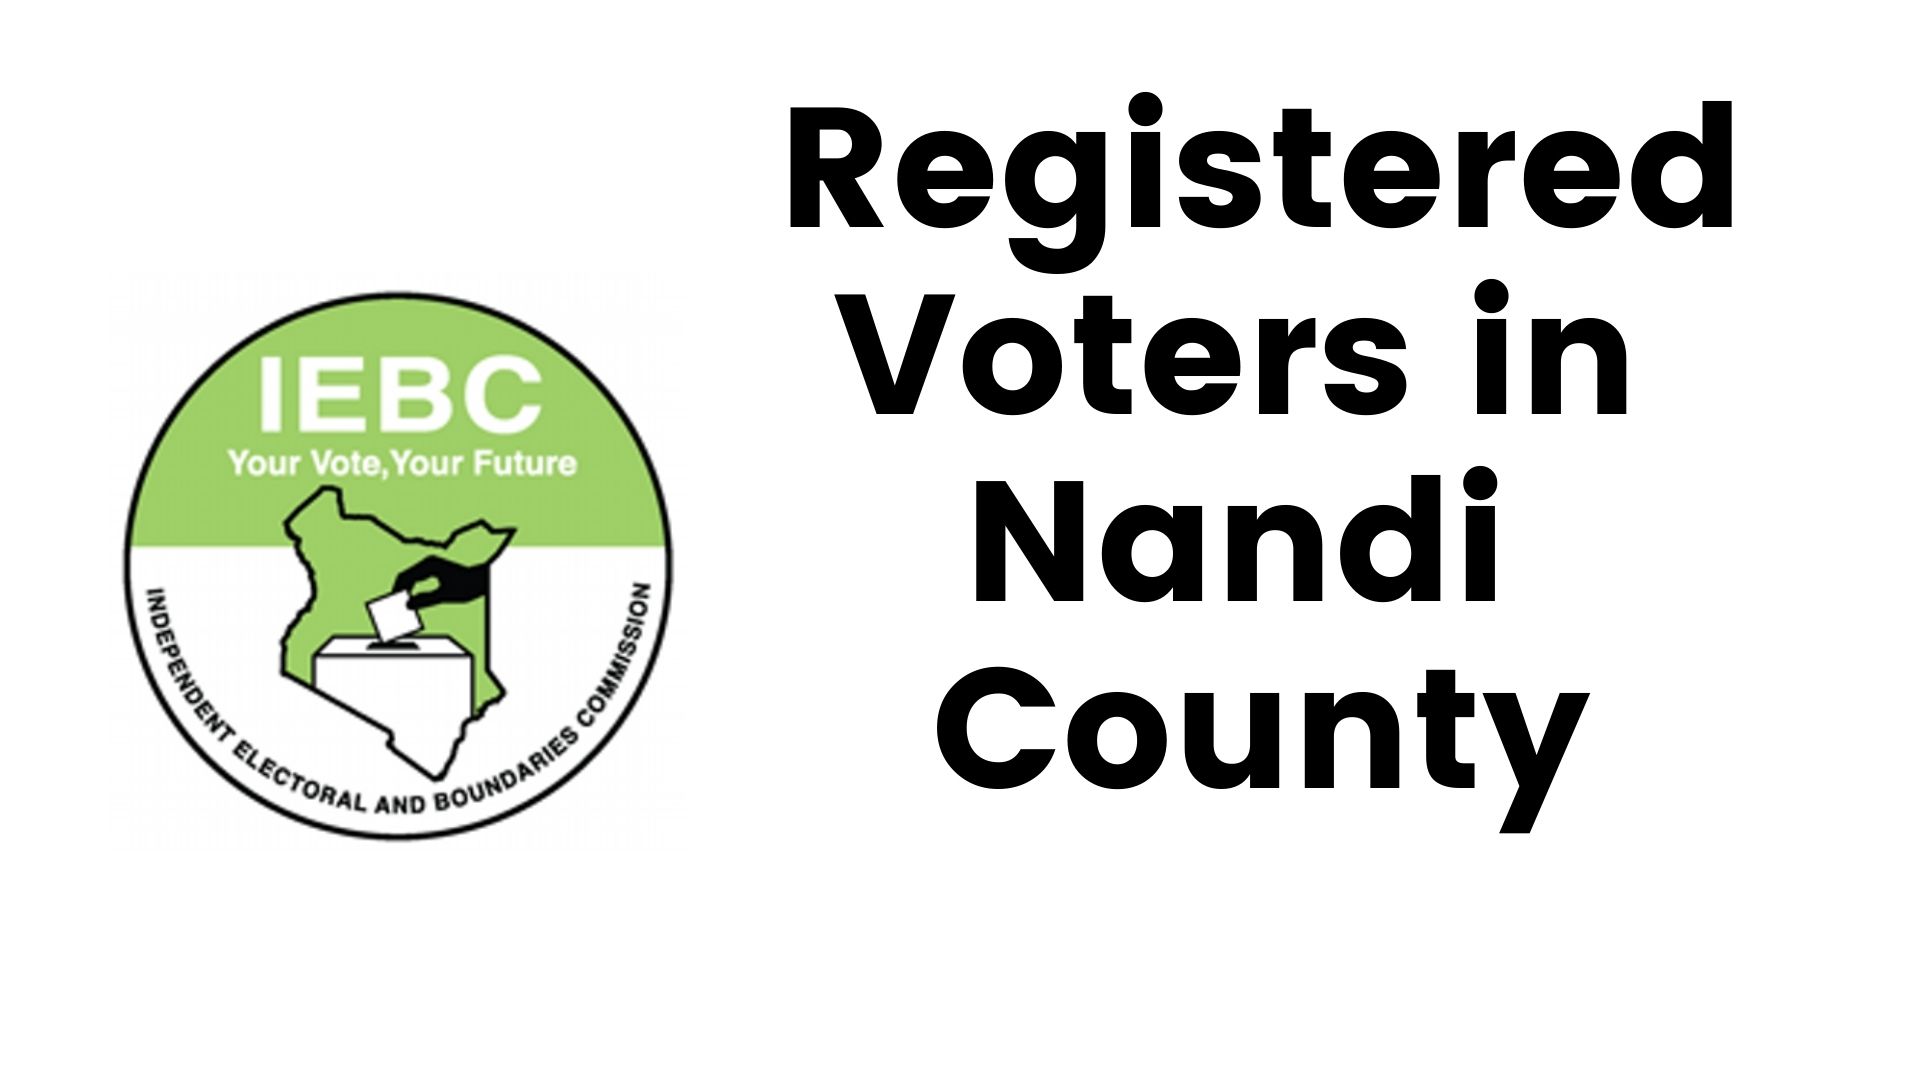 IEBC Nandi County Registered Voters